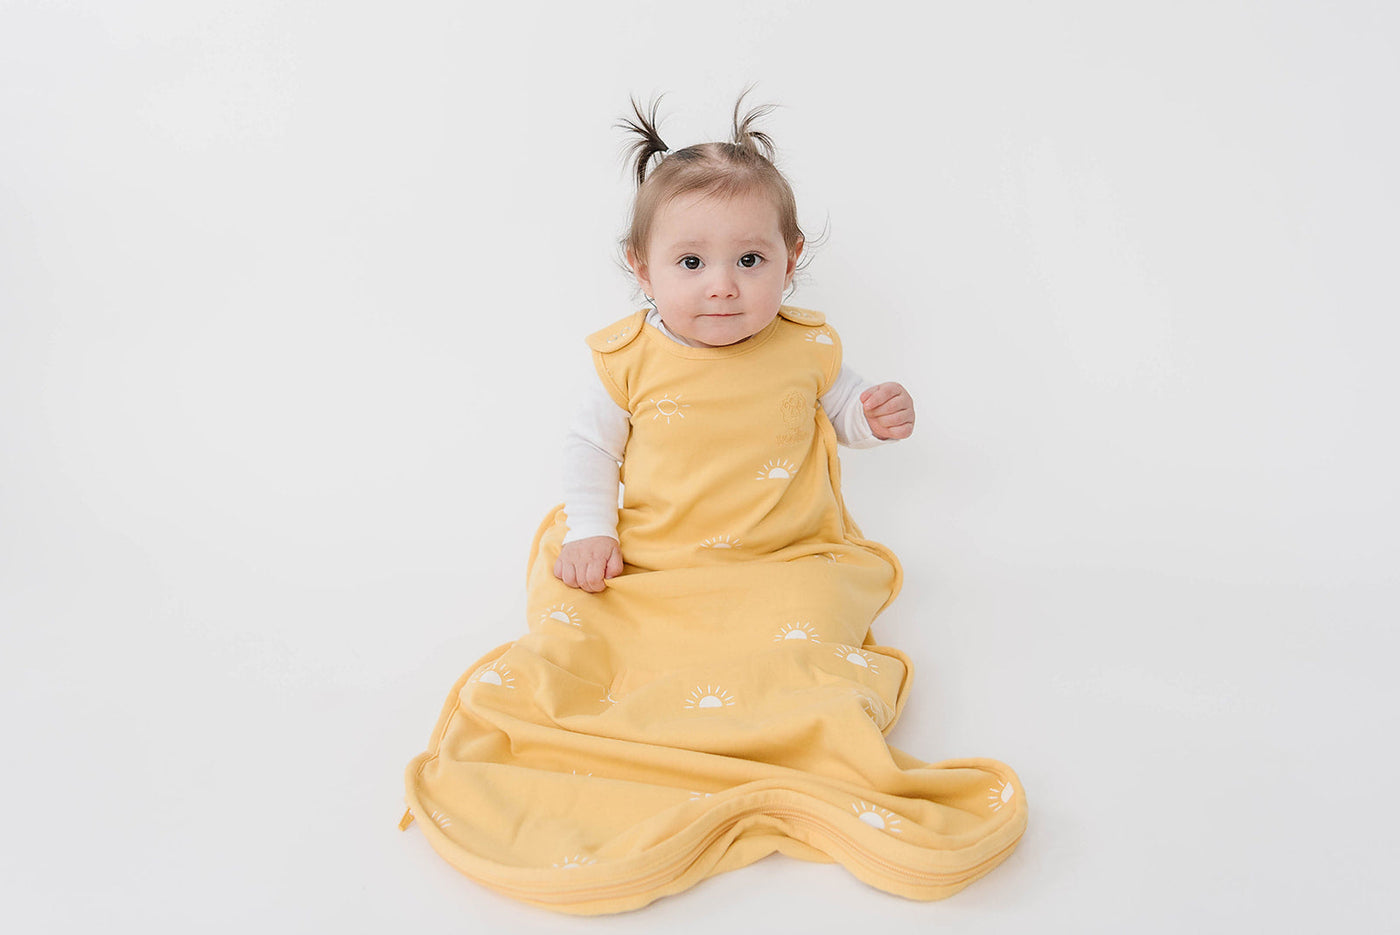 4 Season® Ultimate Baby Sleep Bag, Merino Wool, 2 Months - 2 Years, Sun